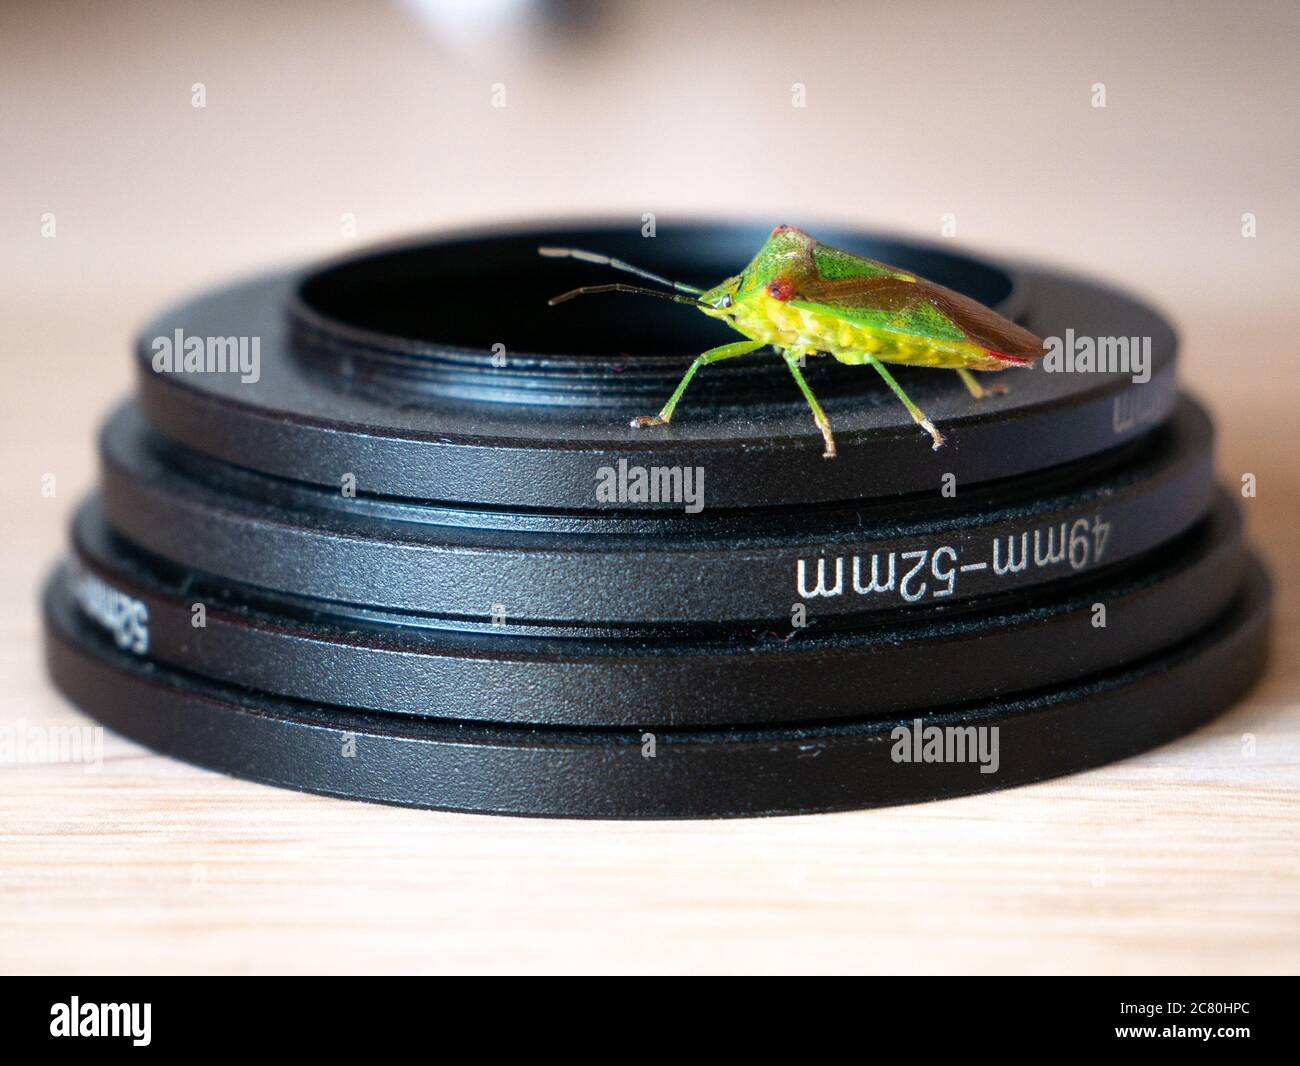 creepy crawly stink bug on camera equipment Stock Photo